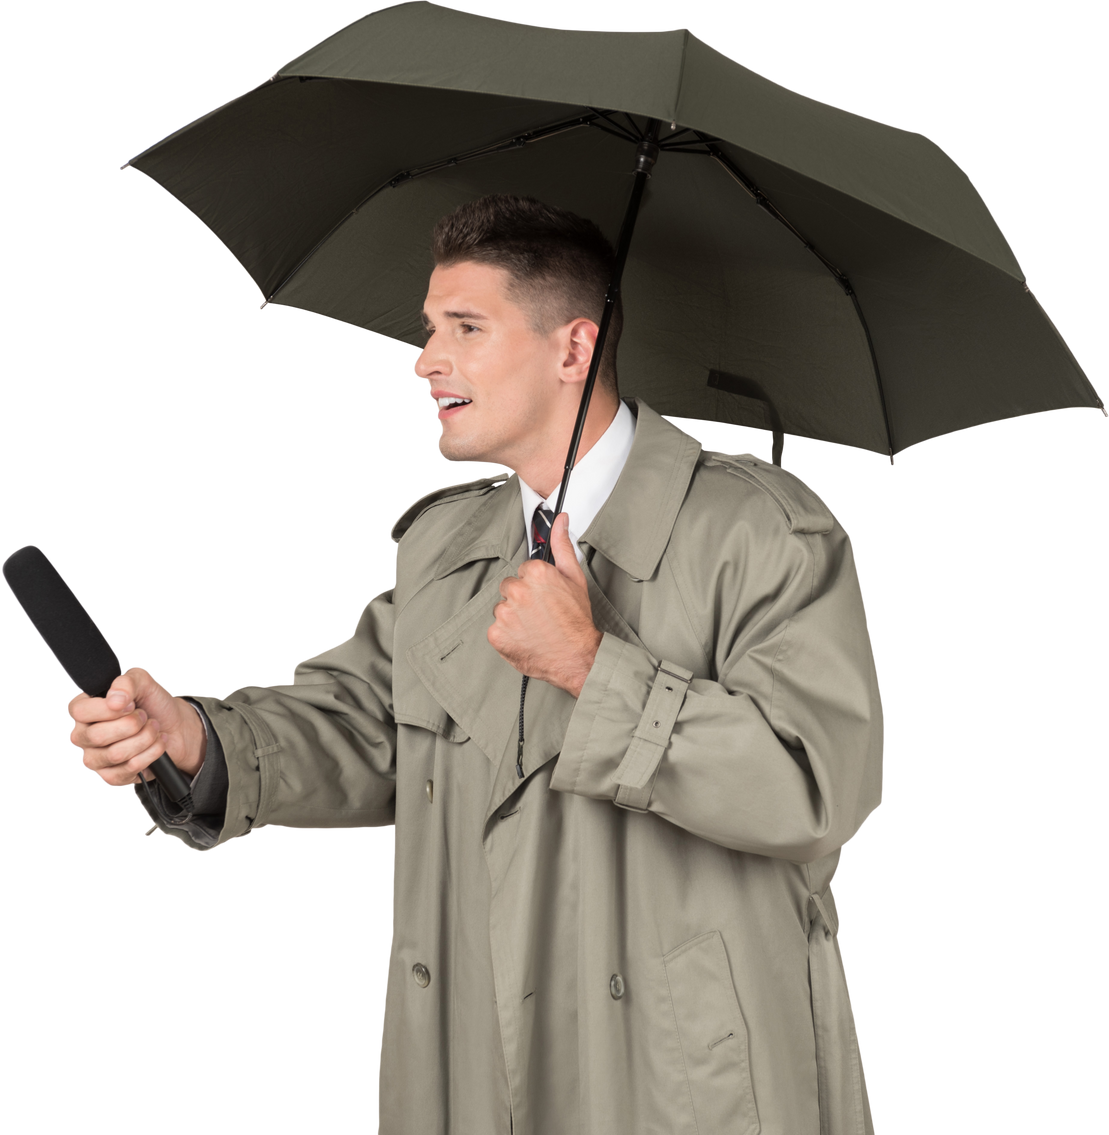 Male News Reporter Holding Umbrella